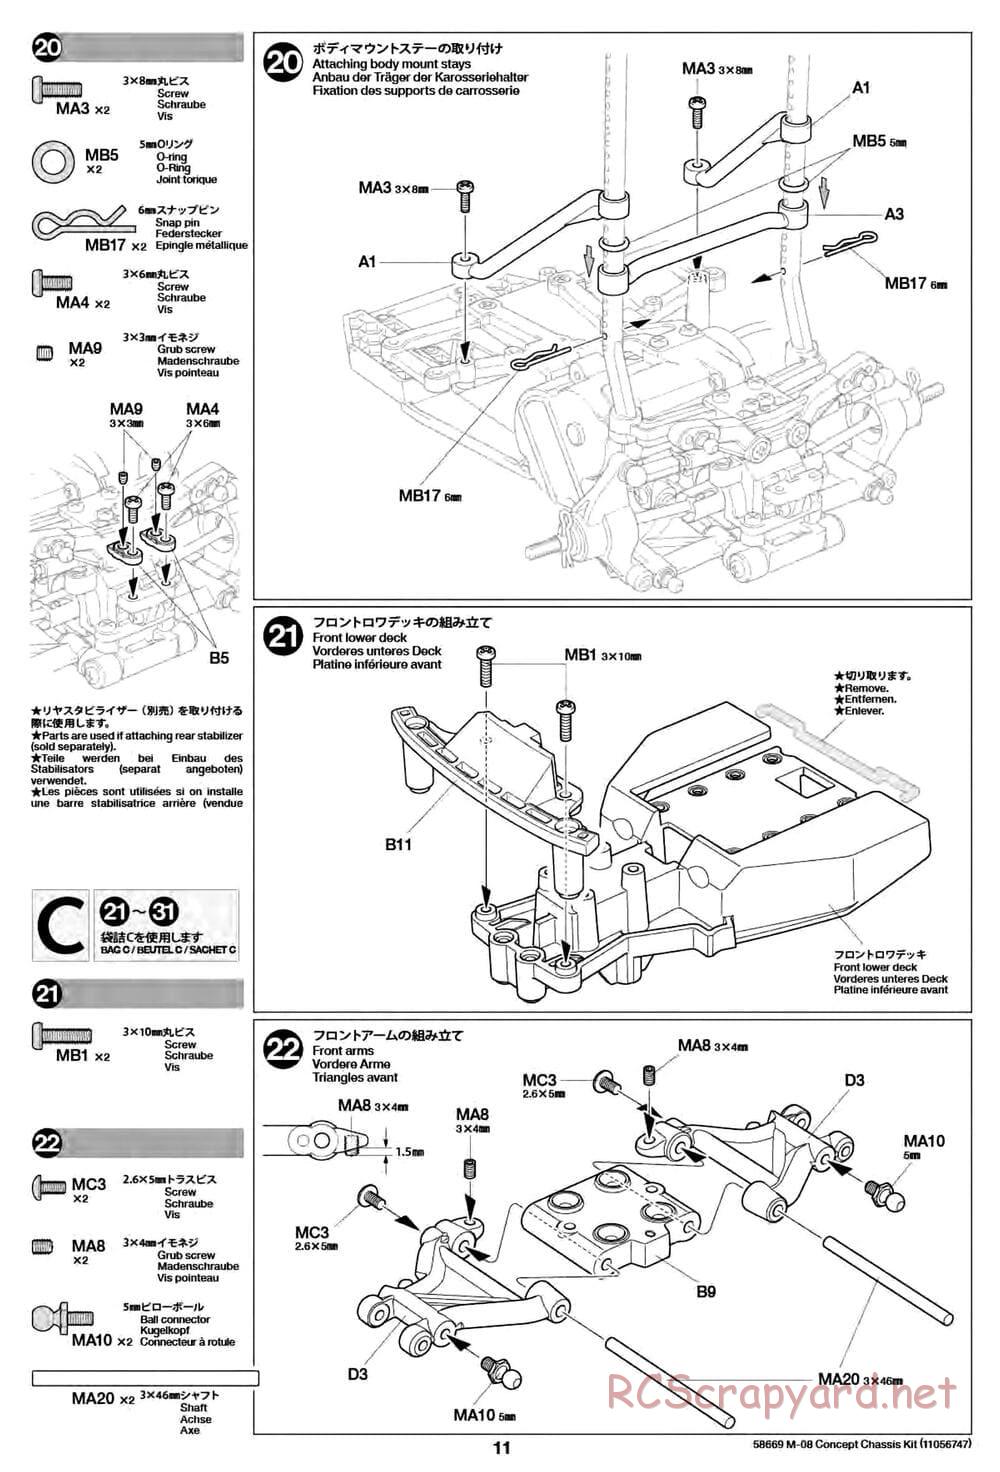 Tamiya - M-08 Concept Chassis - Manual - Page 11